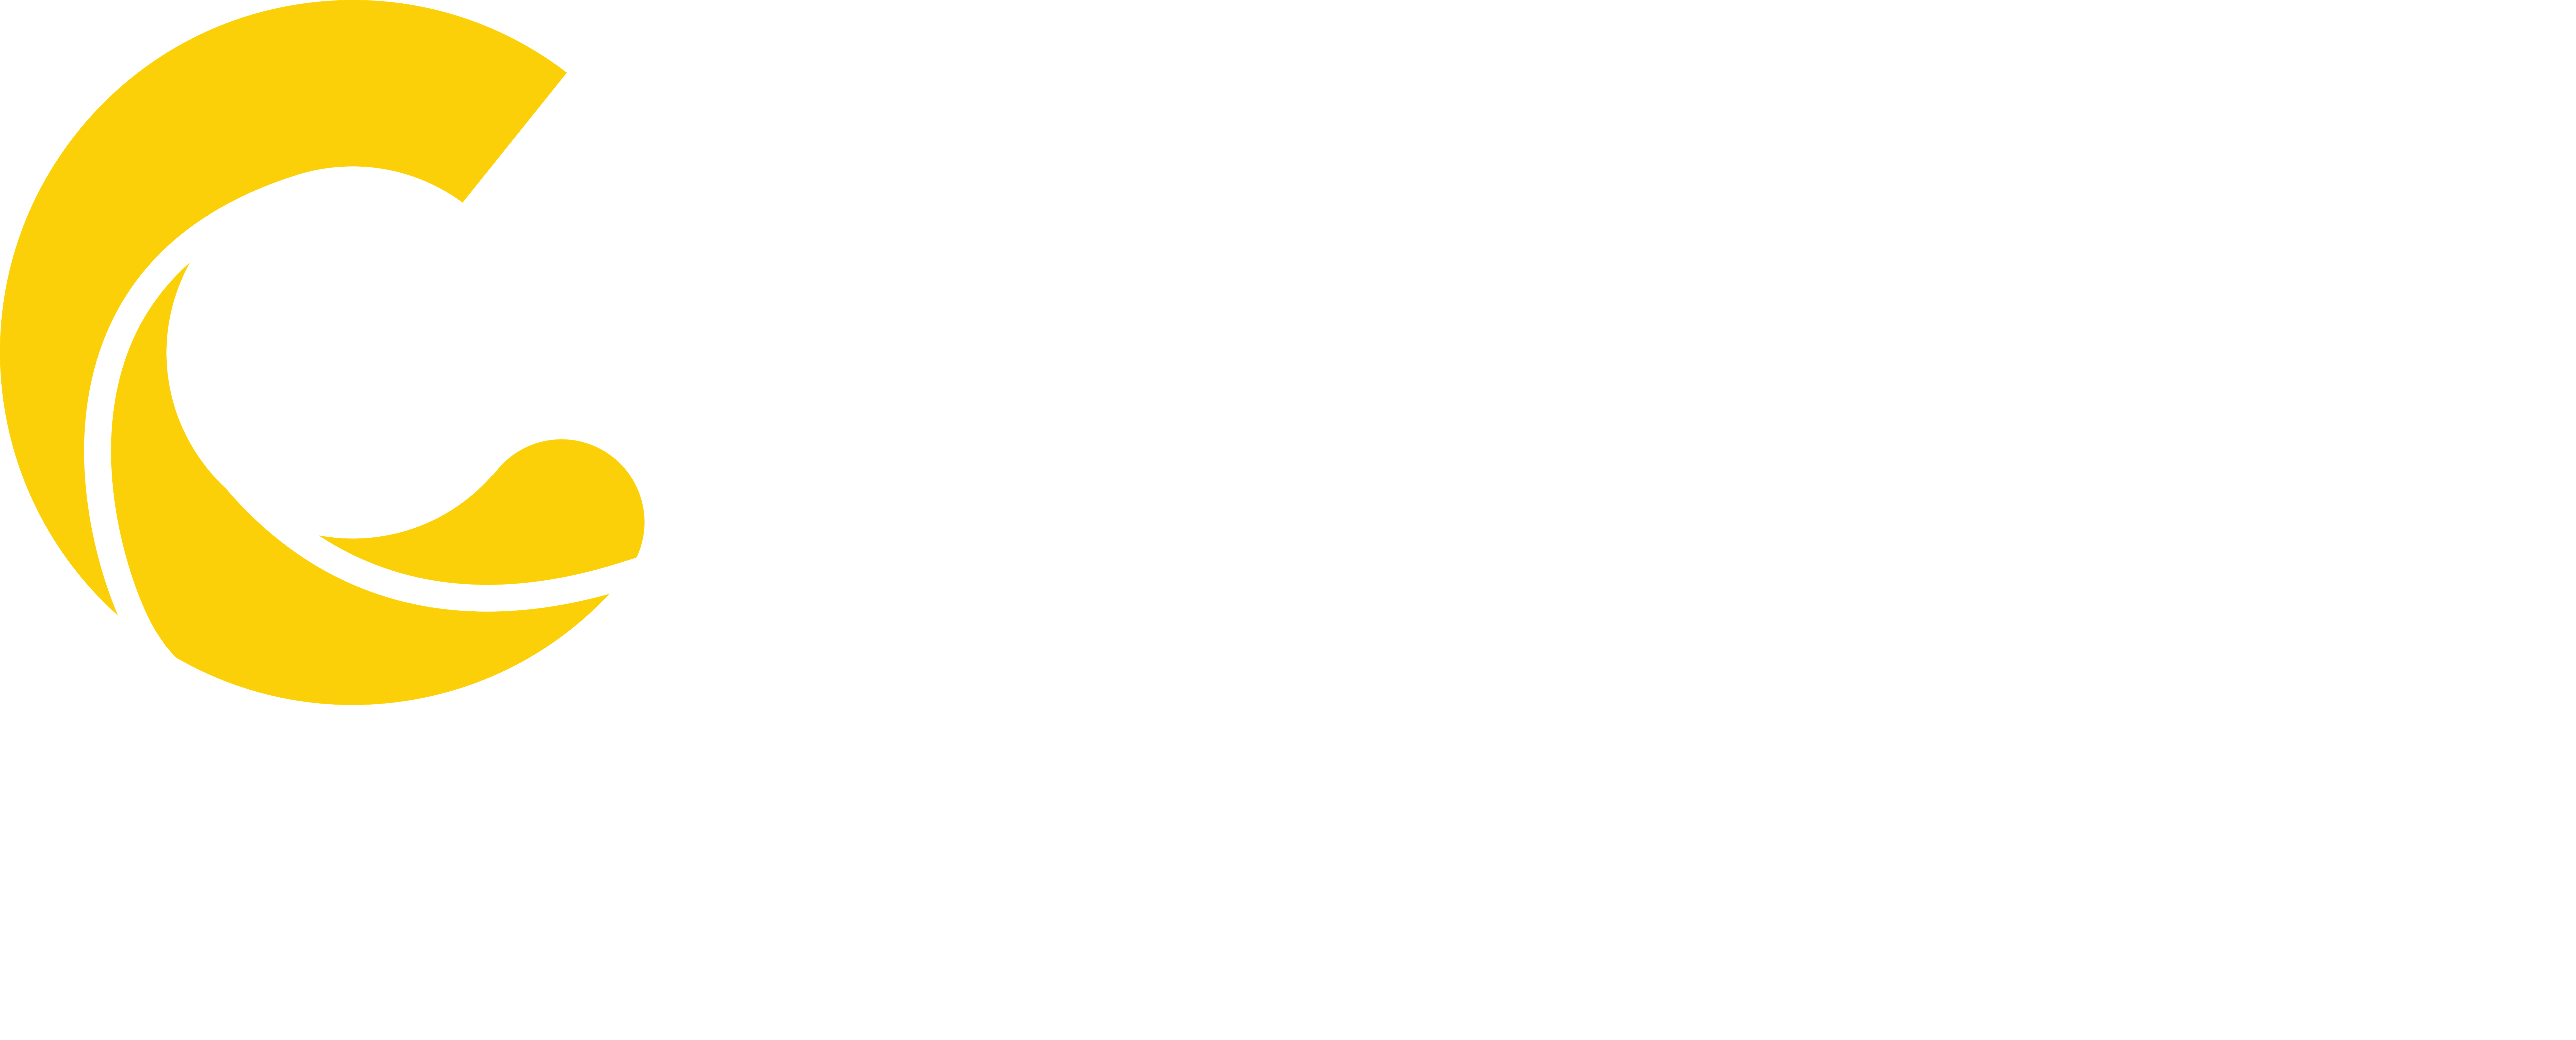 Jockey Club Arts-based Cross Curriculum Creative Learning Project